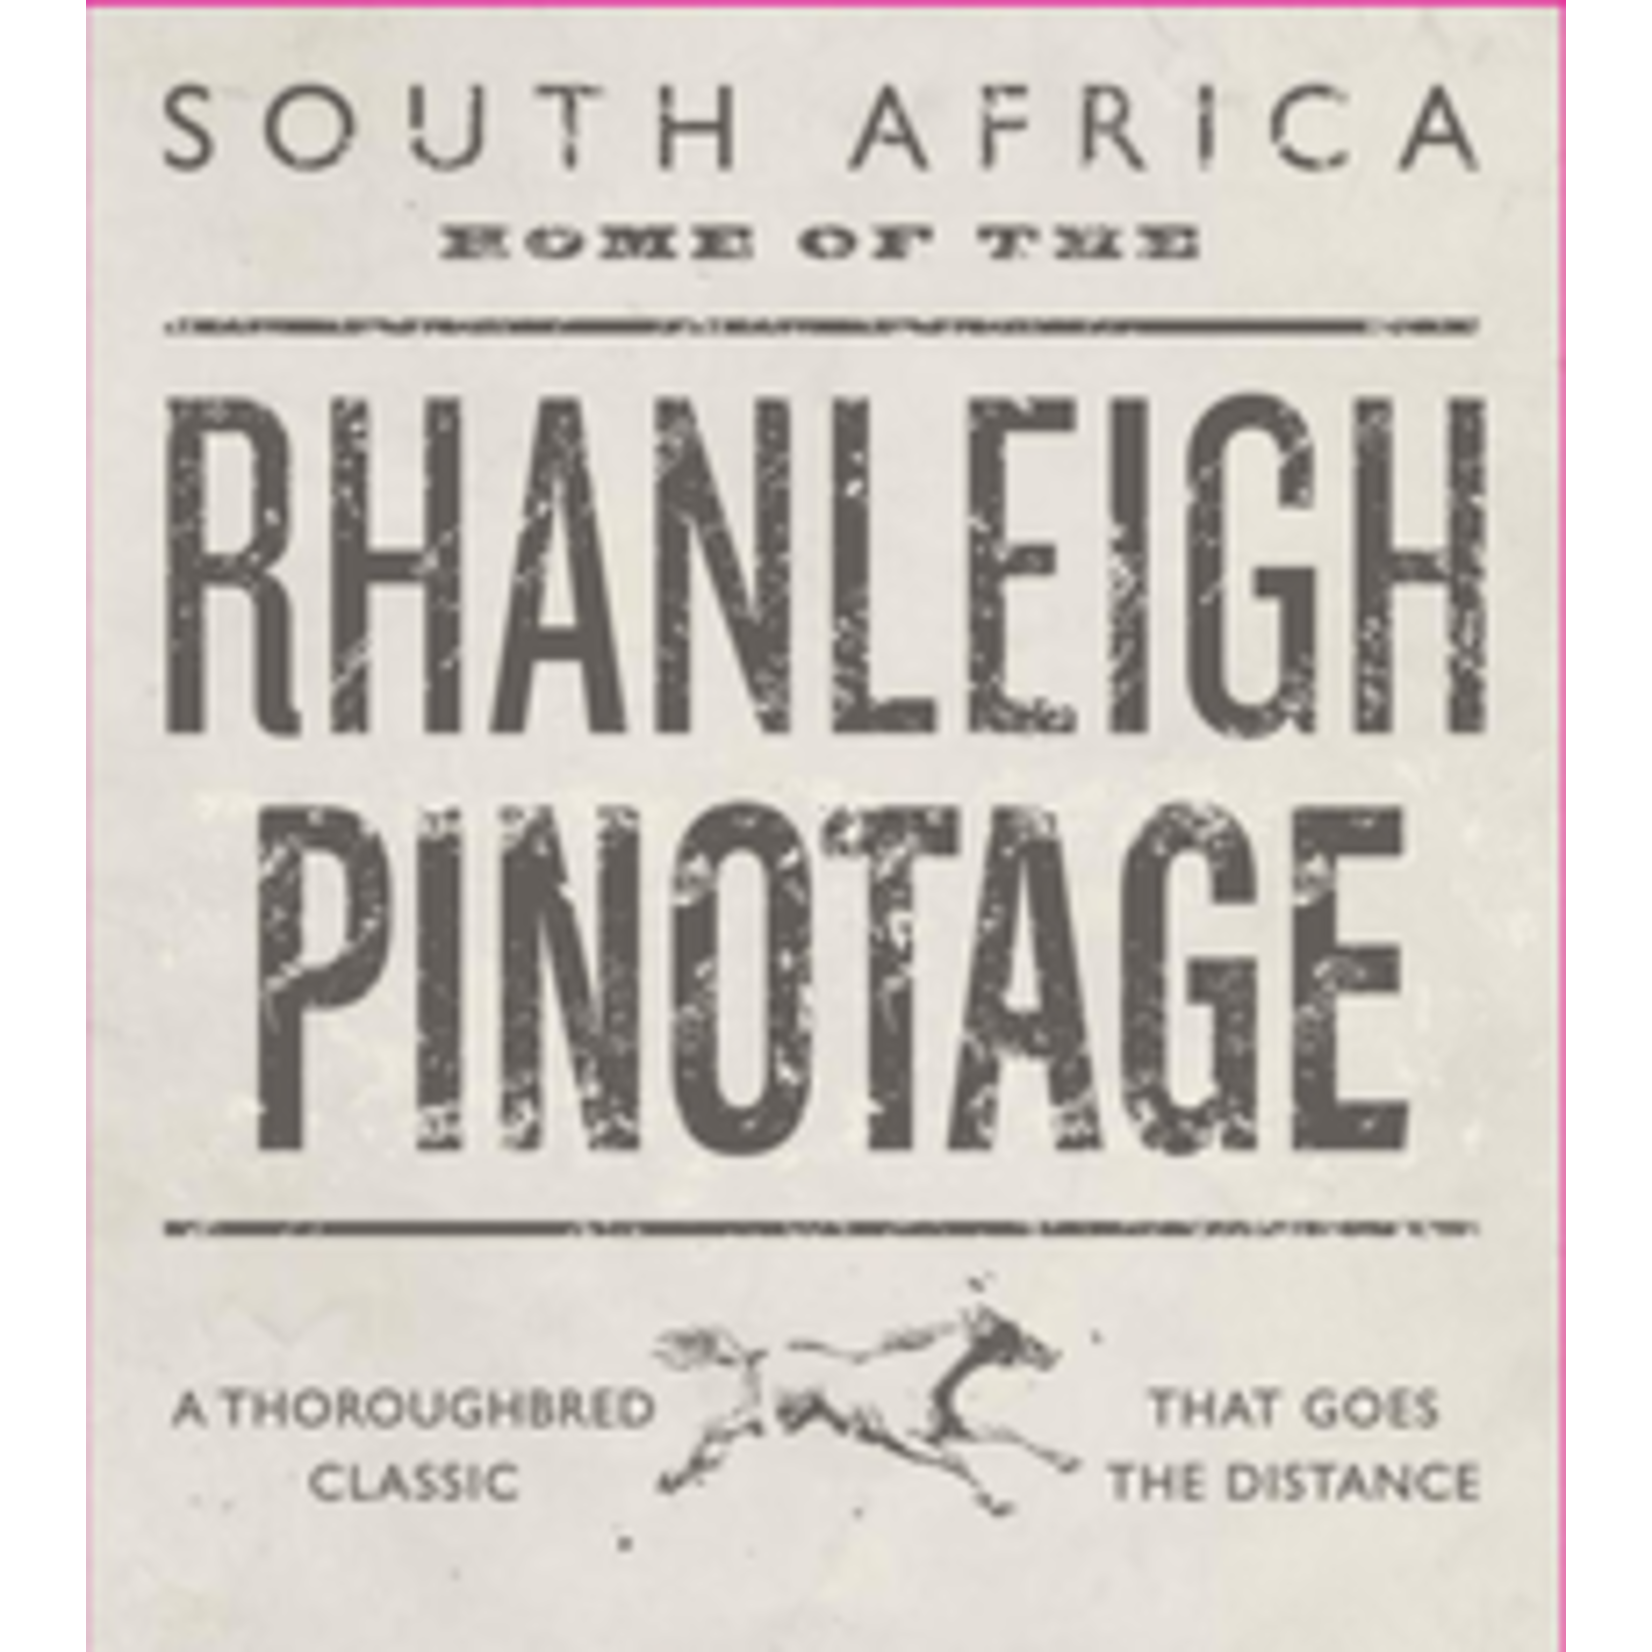 Wine Rhanleigh Pinotage South Africa 2020